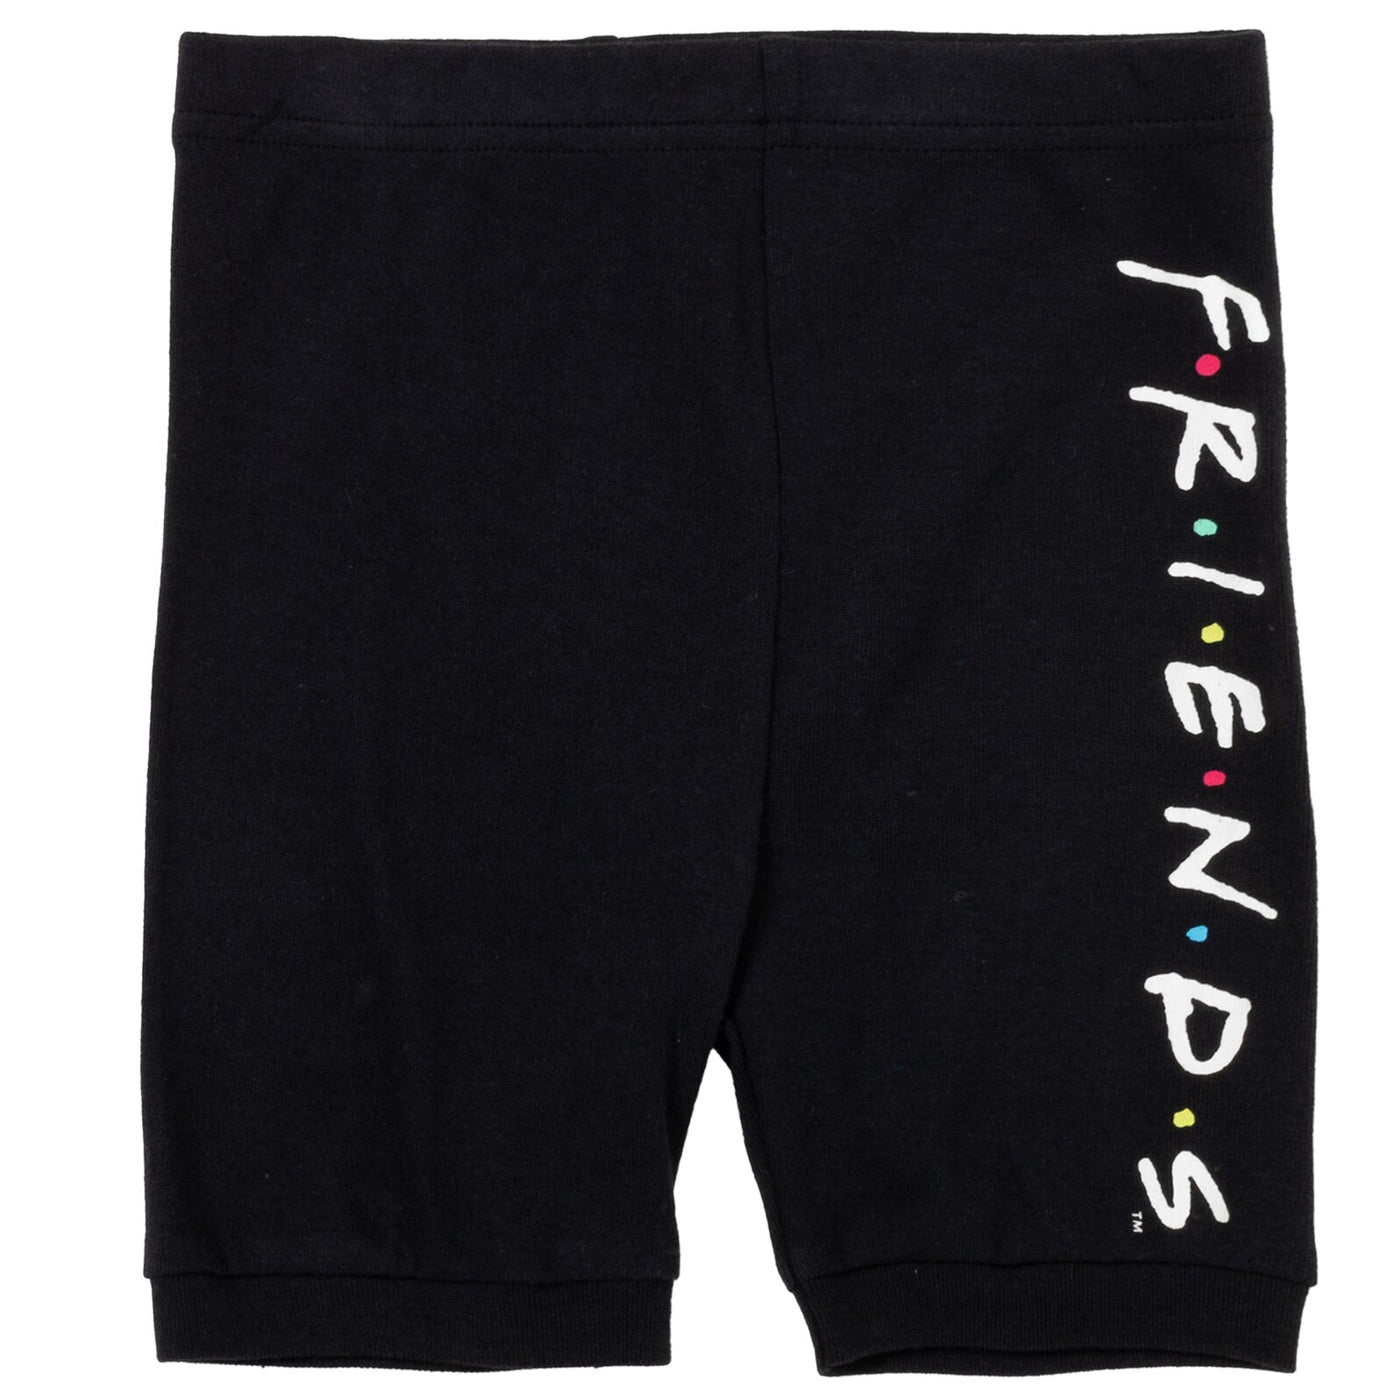 FRIENDS Pajama Shirt and Shorts Sleep Set - imagikids